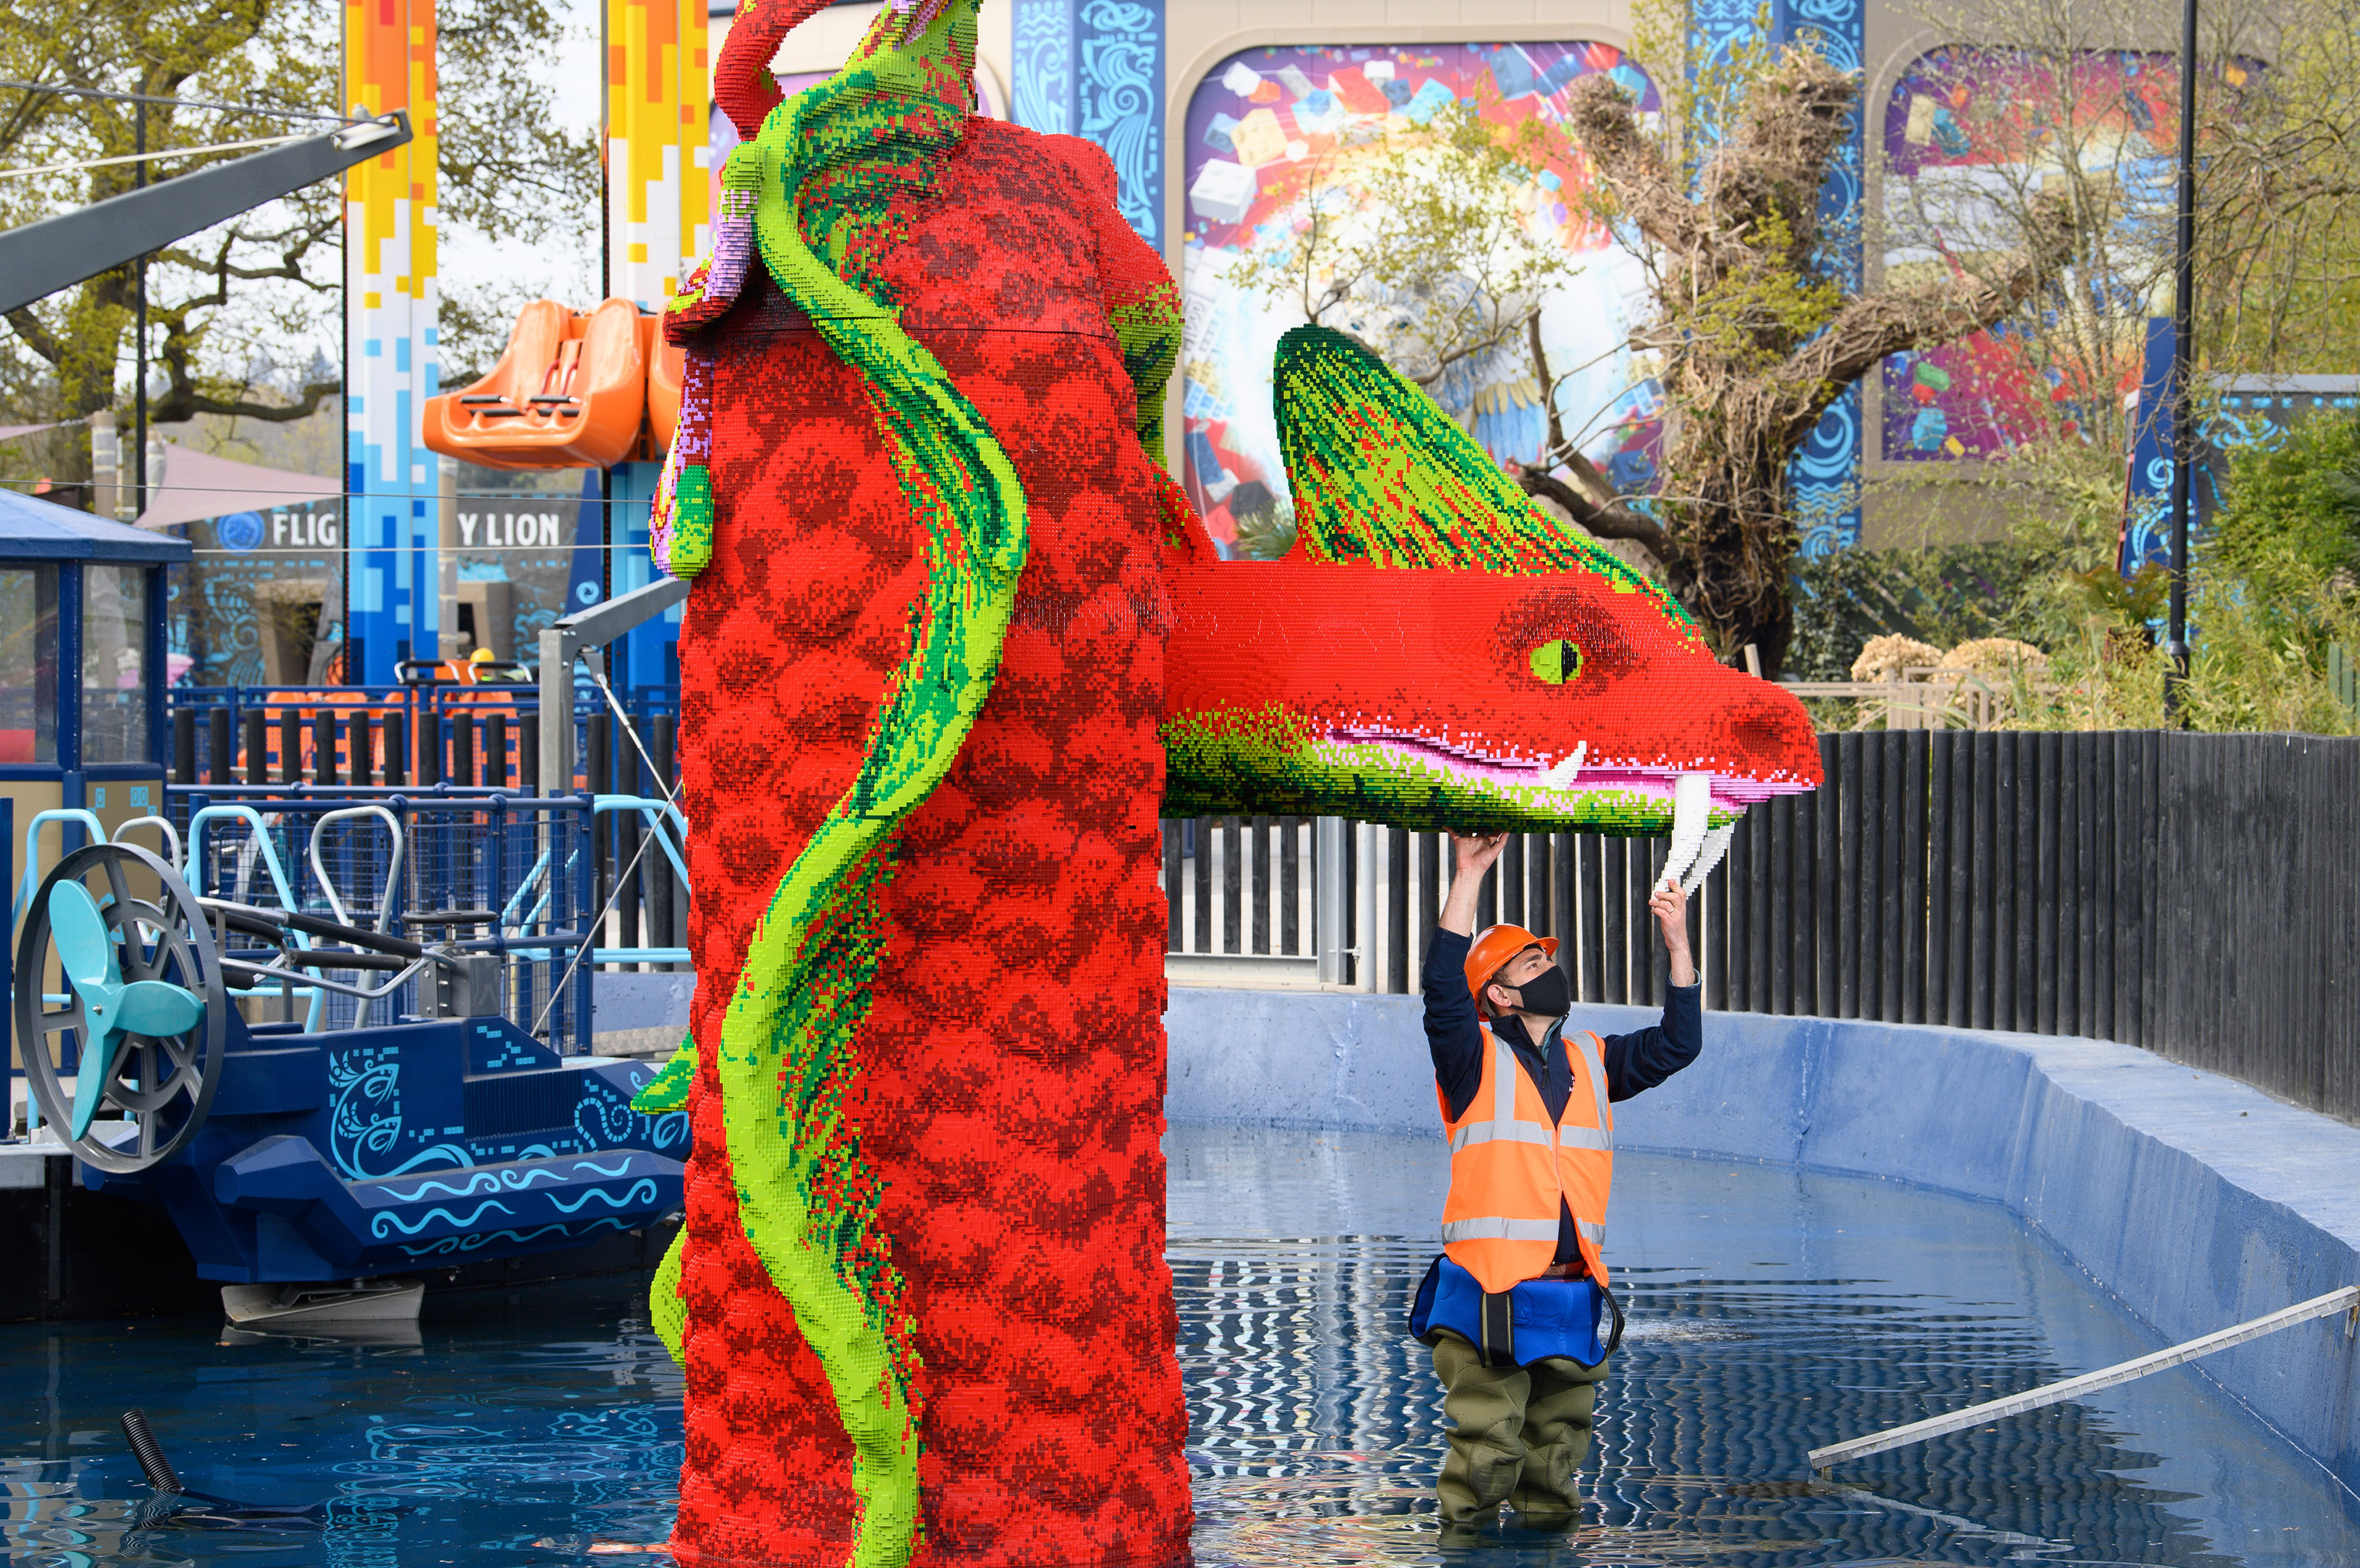 Adding finishing touches to Hydra LEGO Model in LEGO MYTHICA at the LEGOLAND Windsor Resort